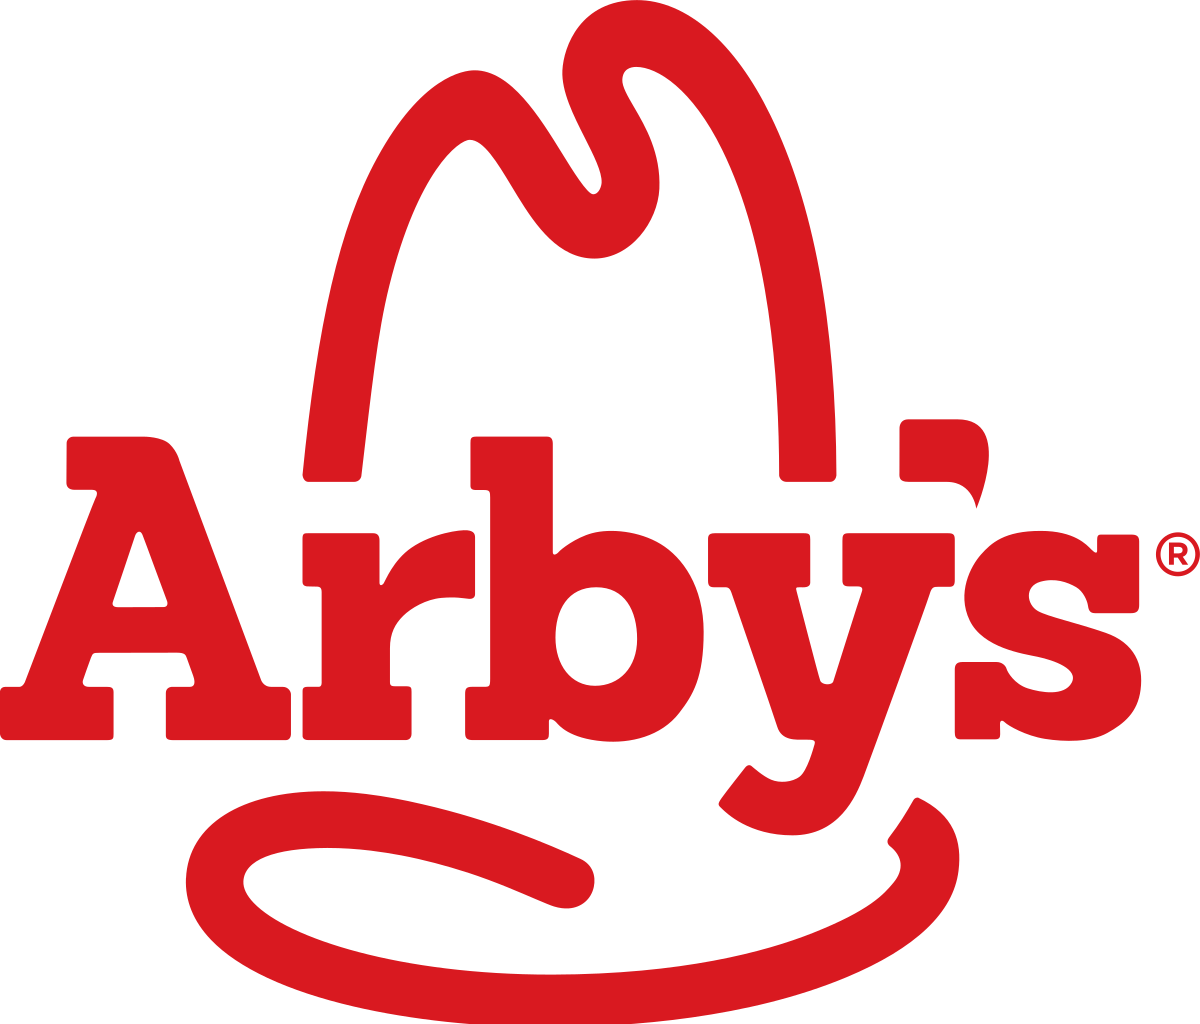 American Fast Food Logo - Arby's